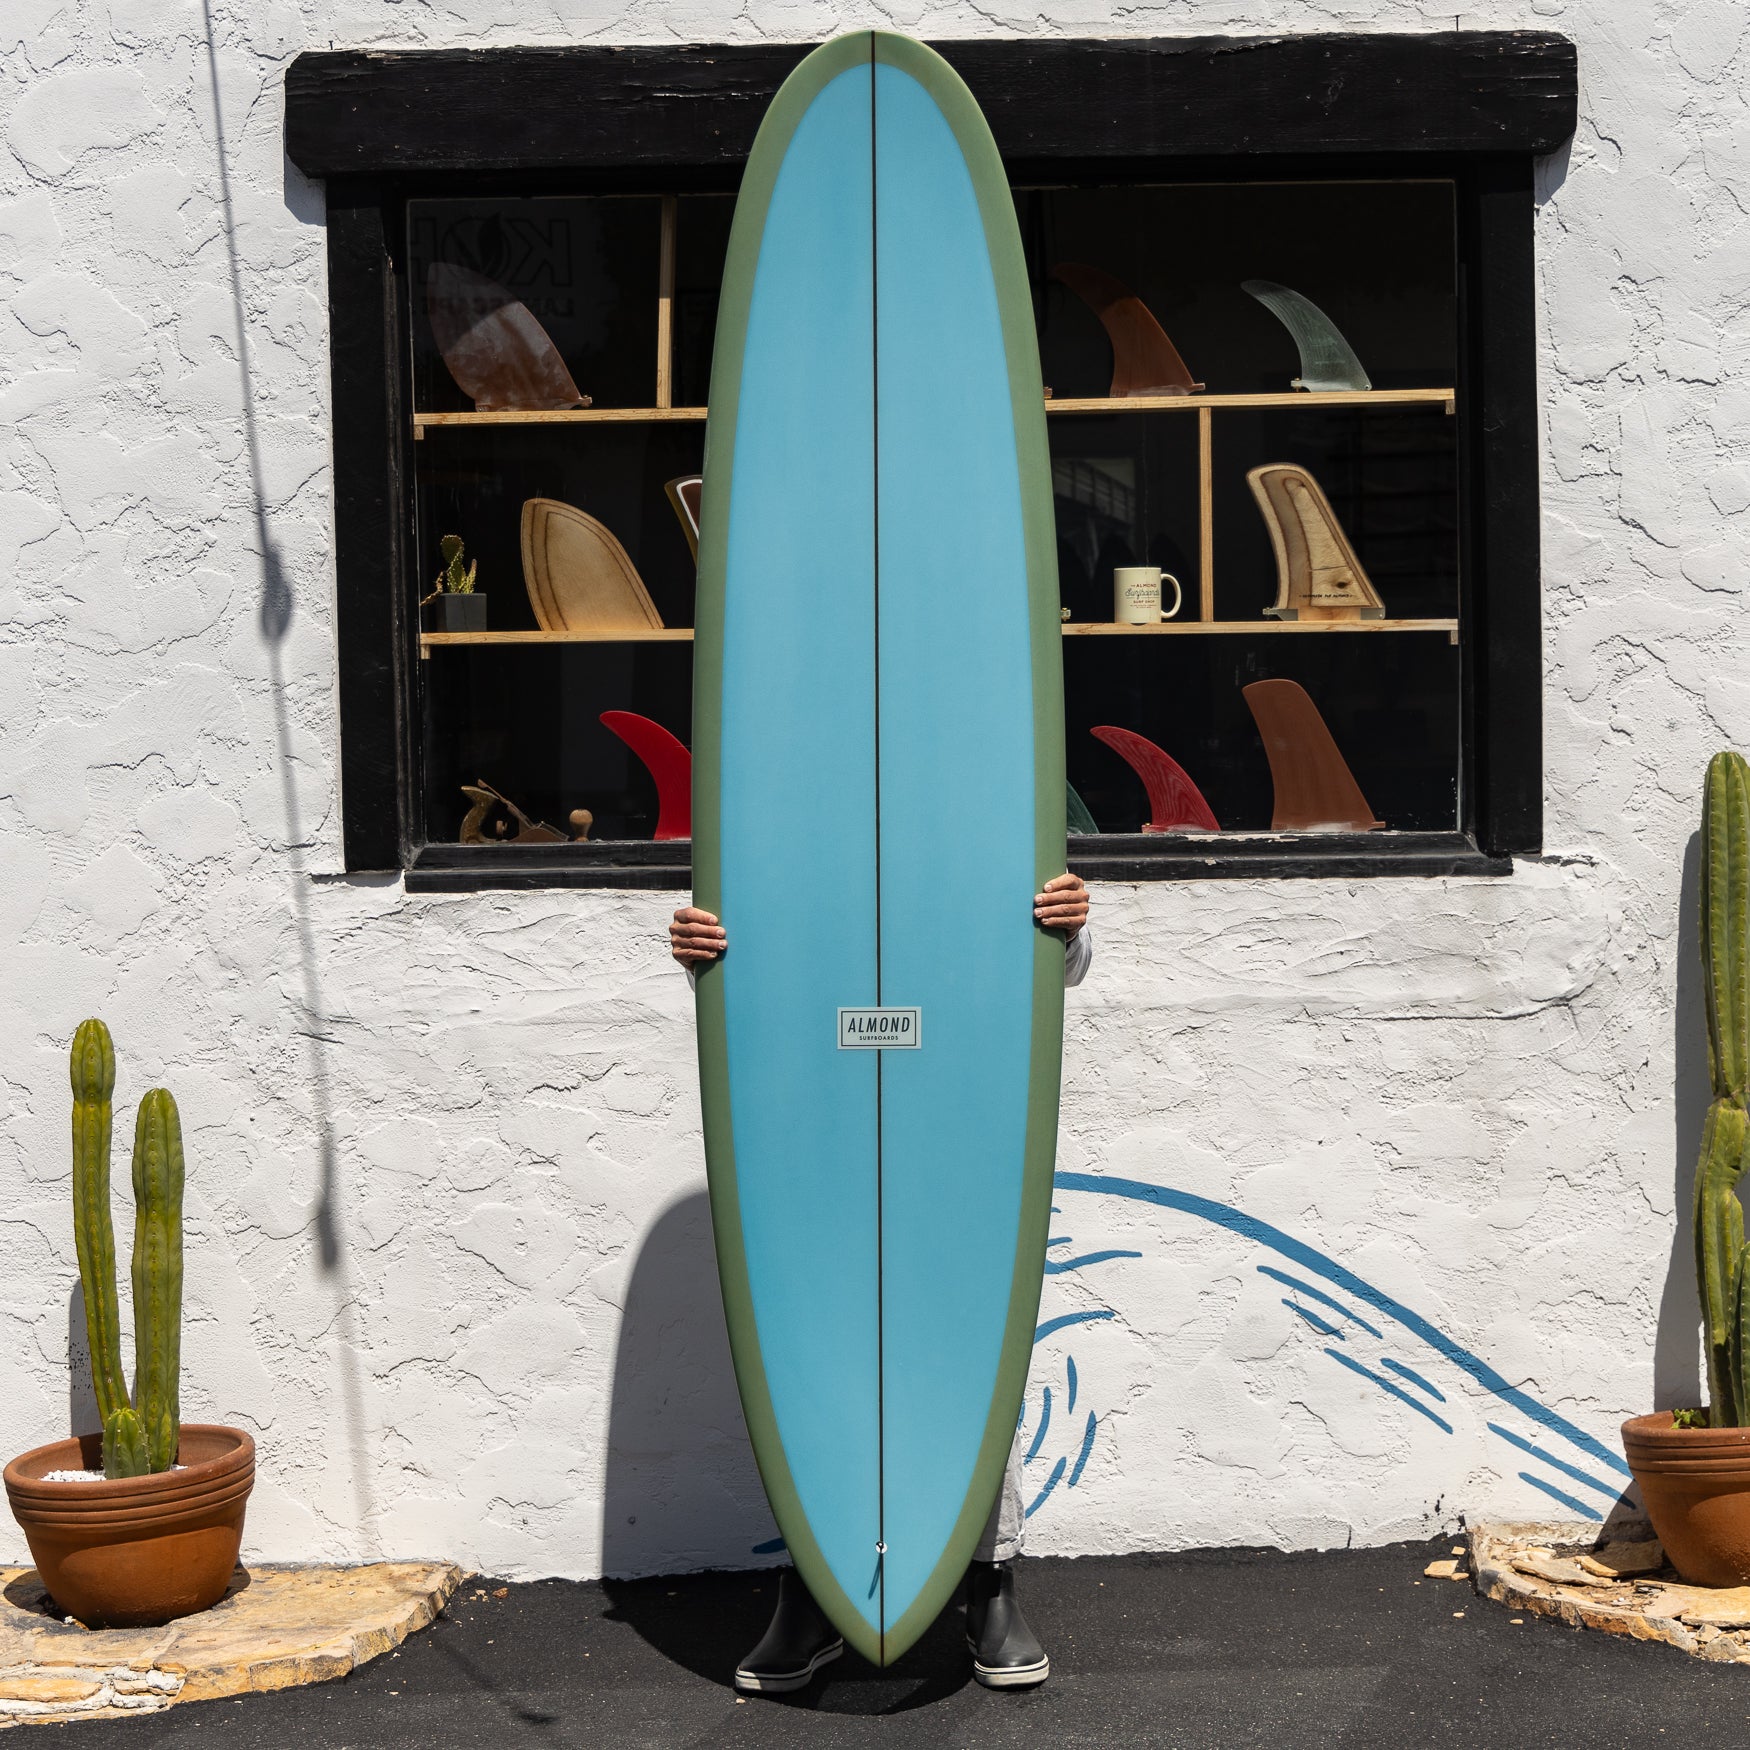 The Joy | Almond Surfboards & Designs